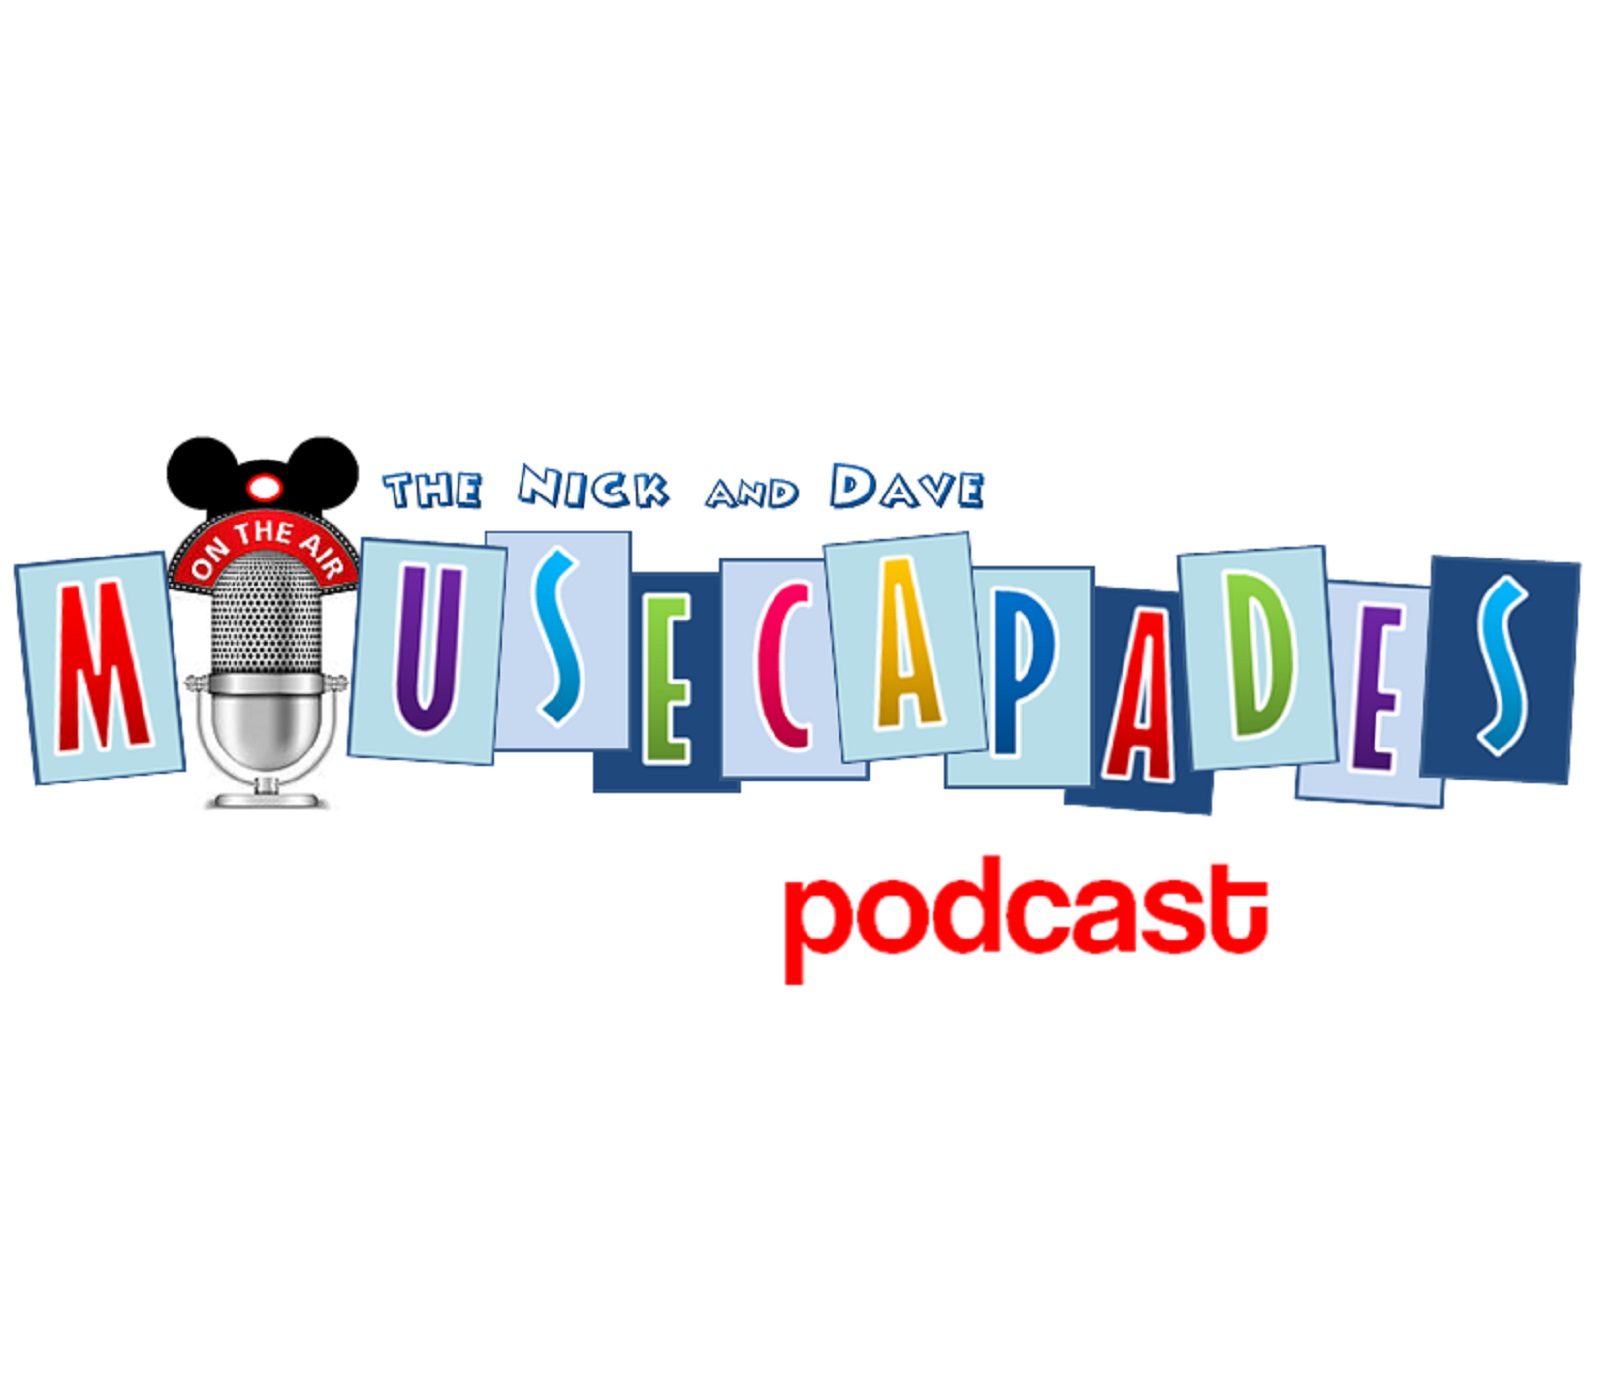 Episode 3 Mousecapades Podcast